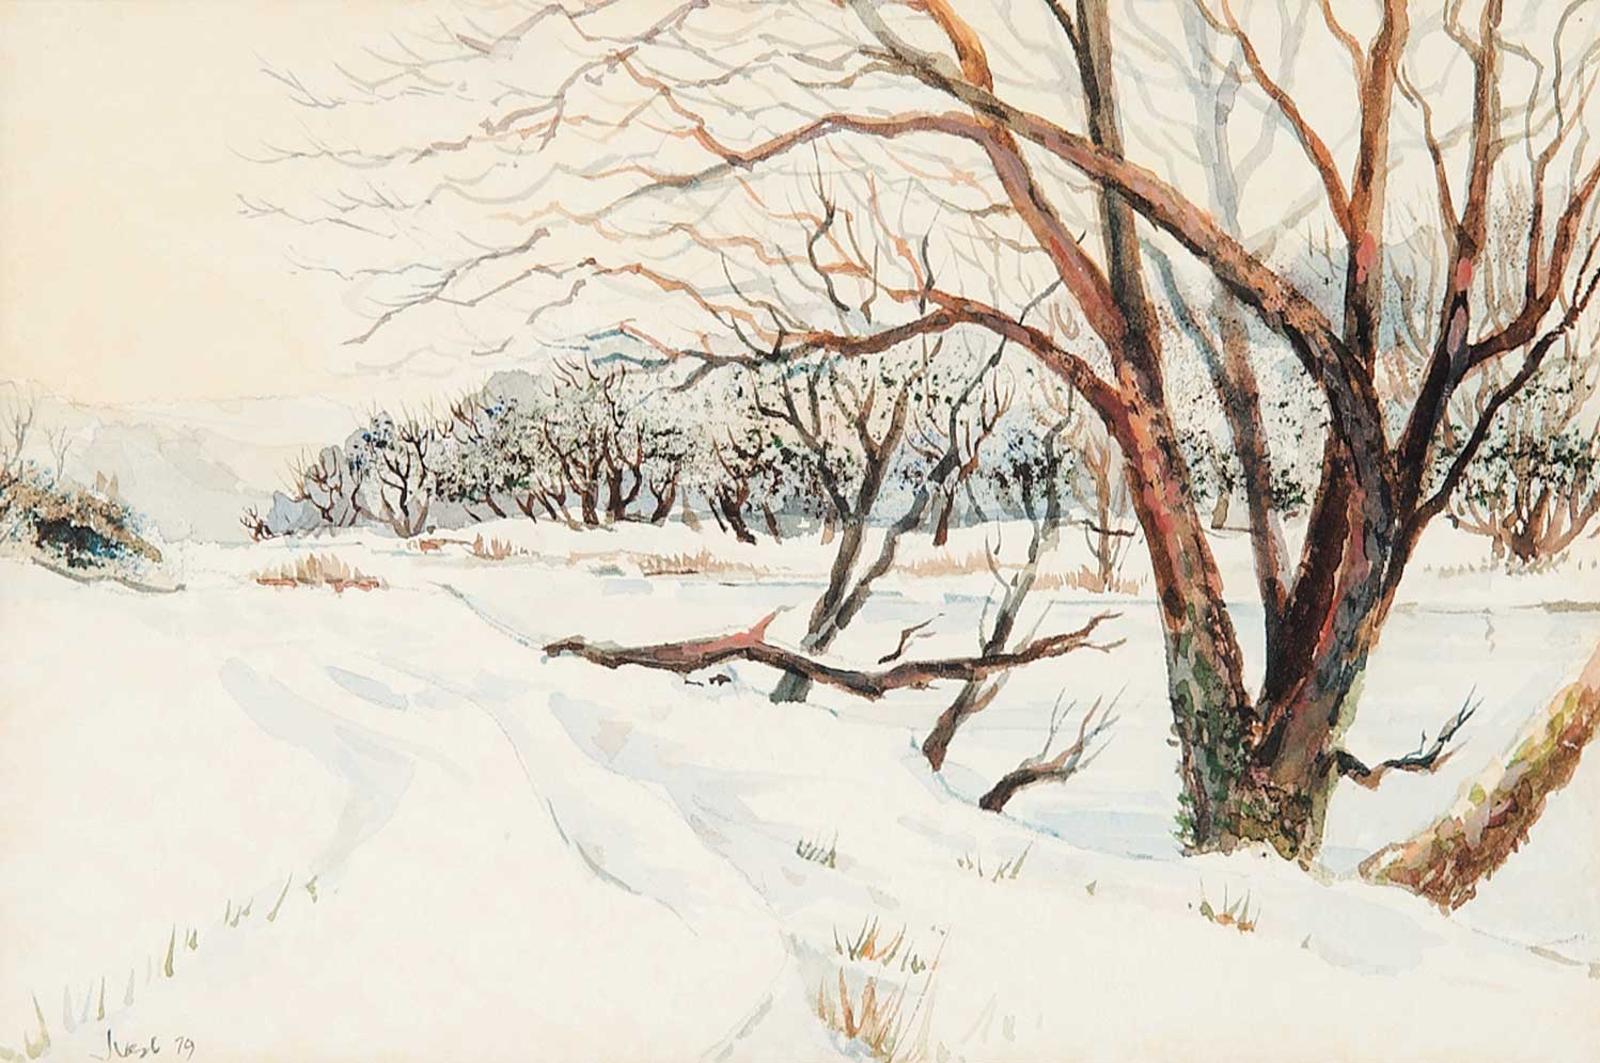 Jim Vest (1939) - Untitled - Winter Road